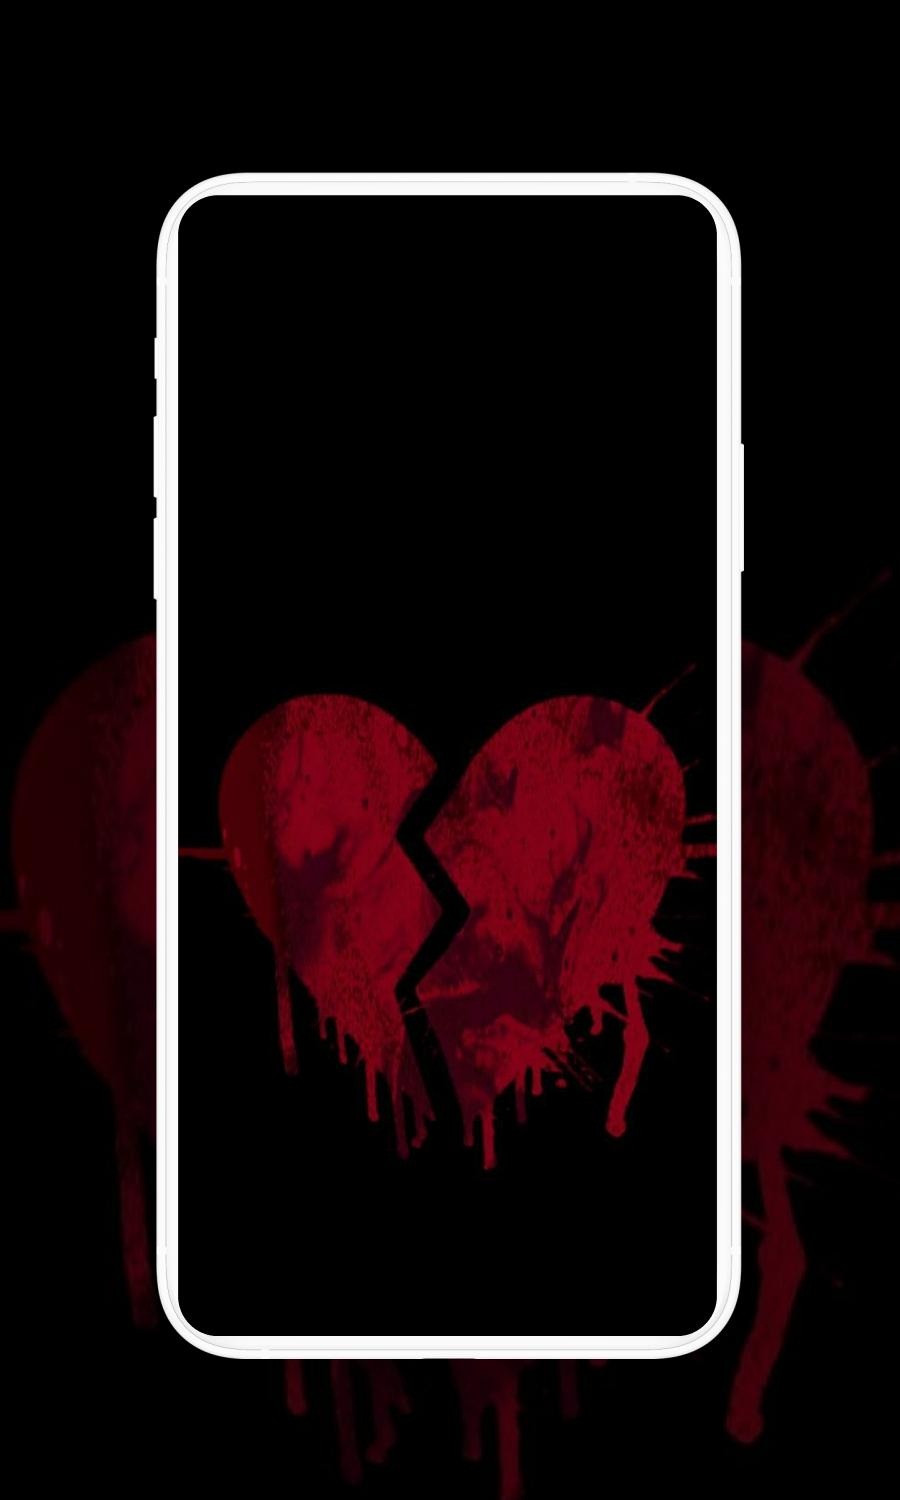 Tải xuống APK Wallpaper of Broken Heart Sad cho Android